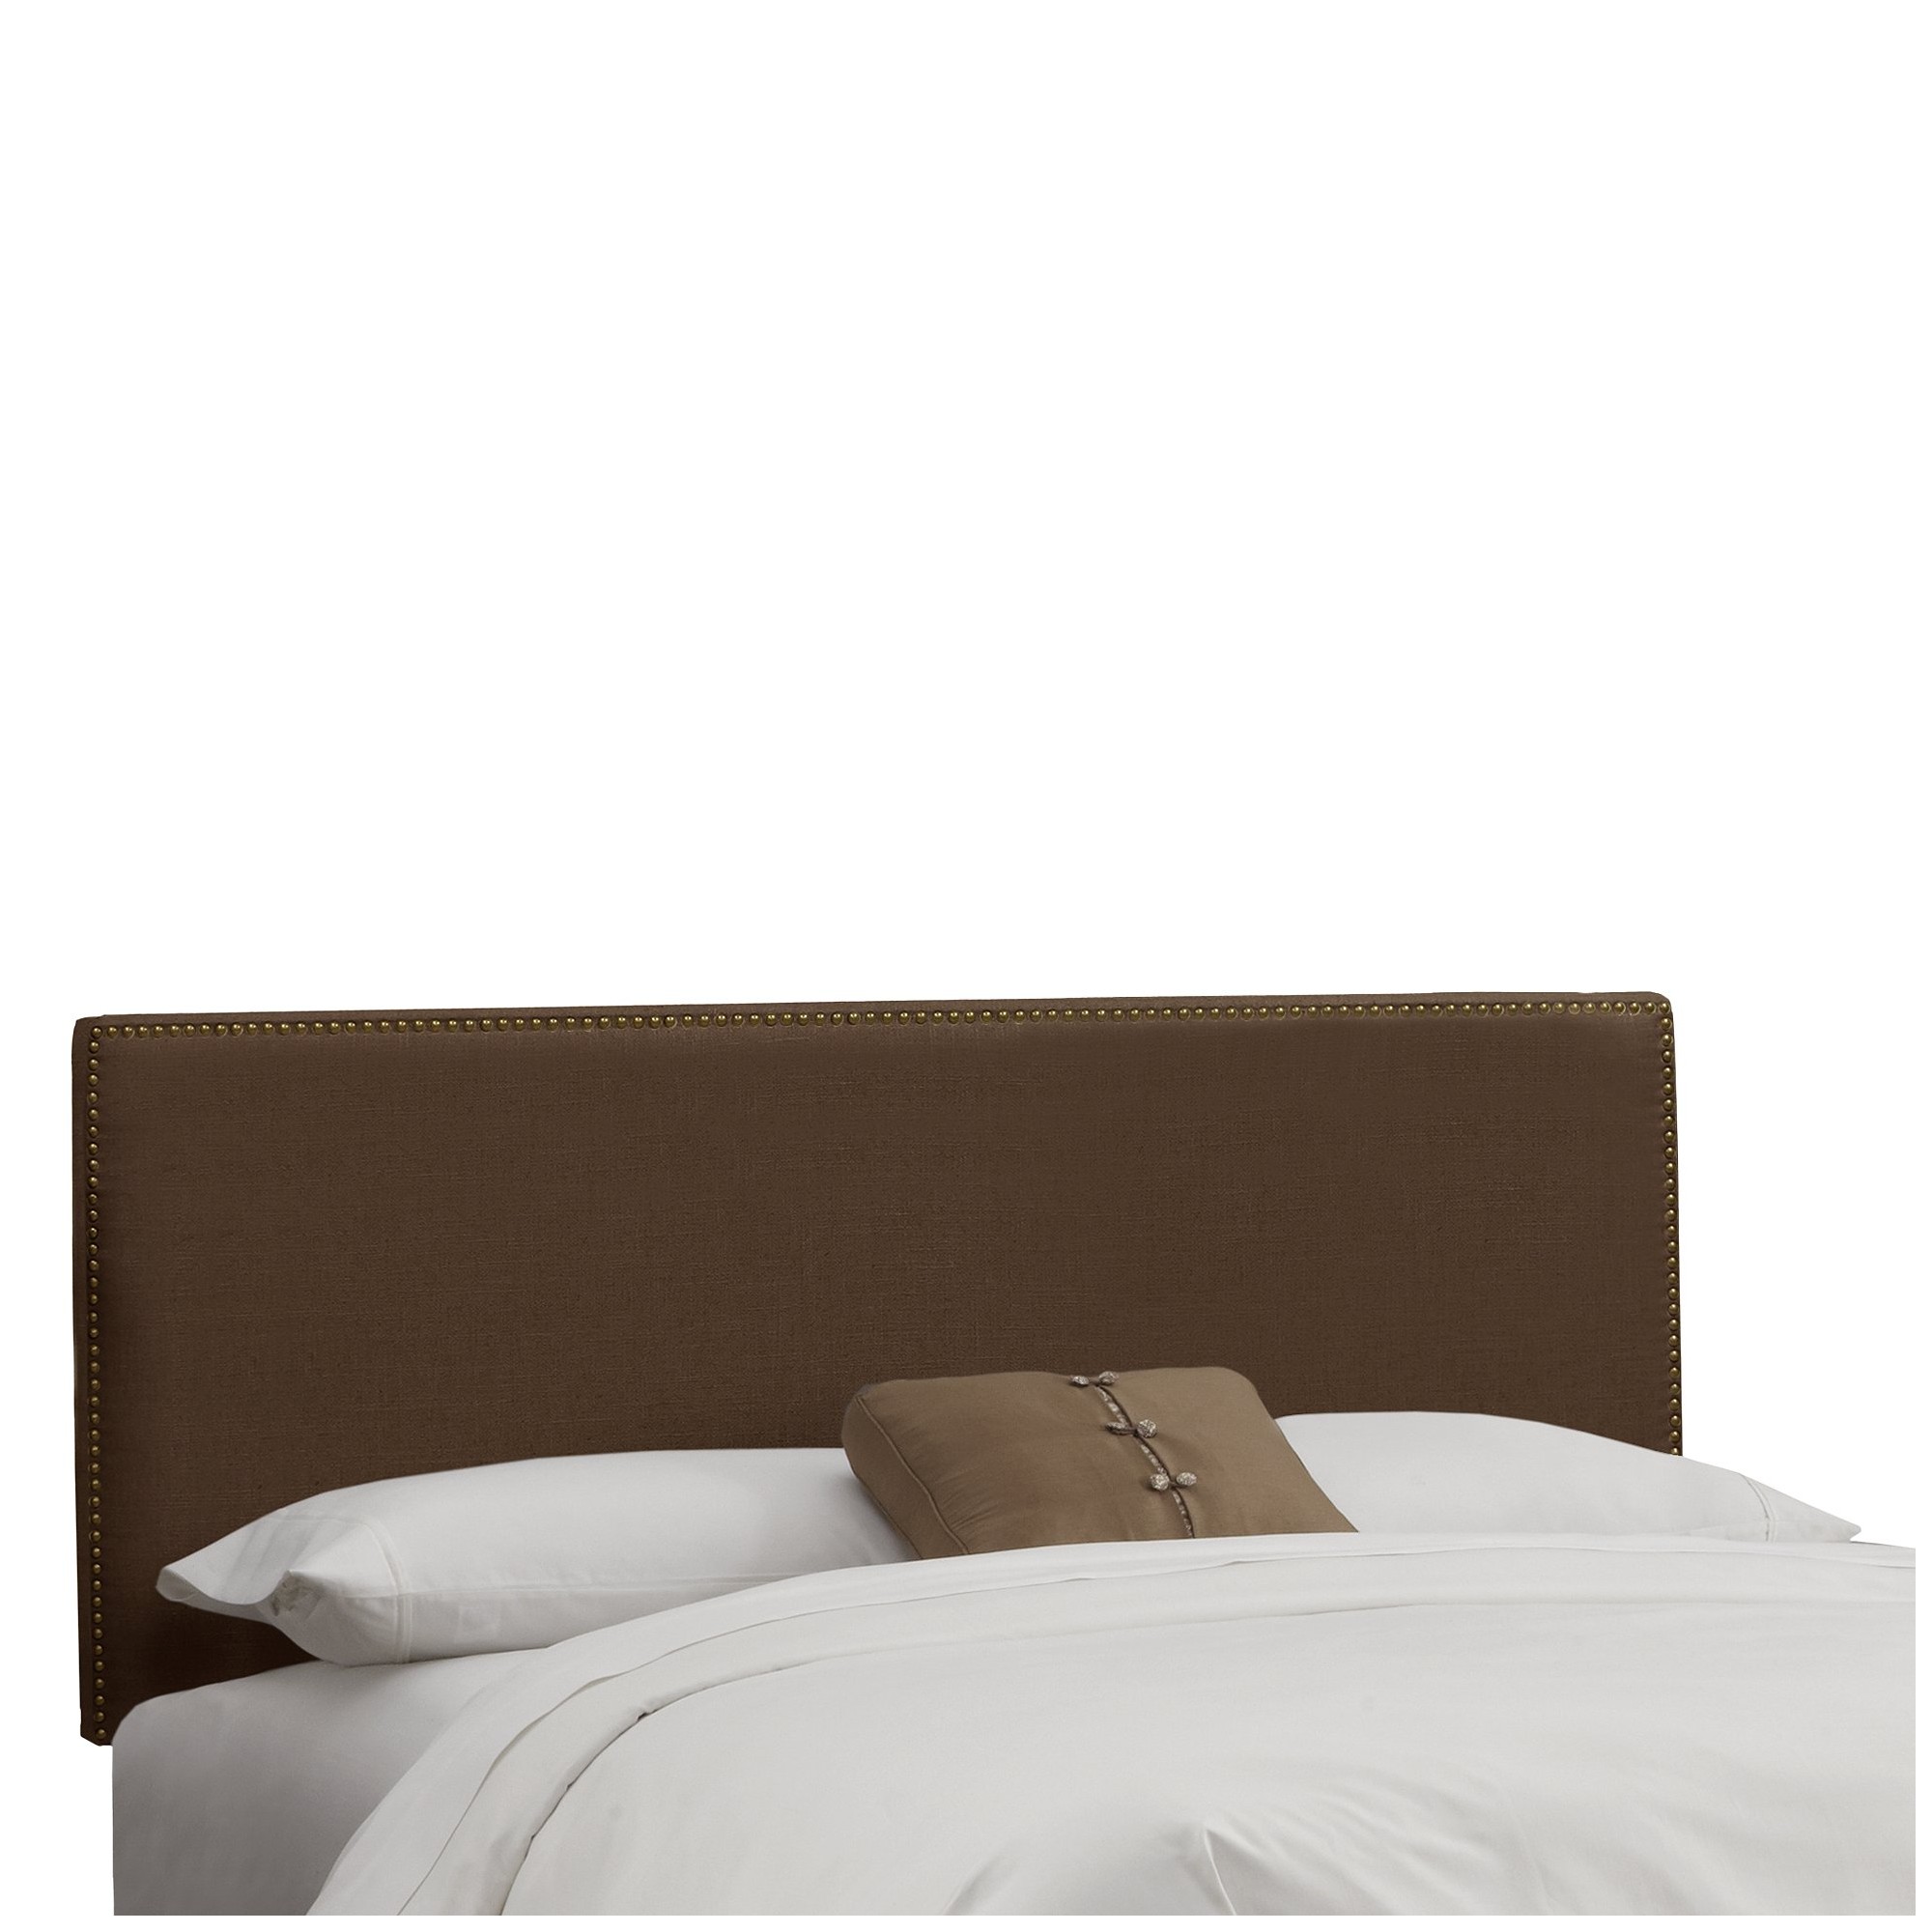 King Arcadia Nailbutton Headboard Linen Chocolate with Brass Nail Buttons - Skyline Furniture, Linen Brown